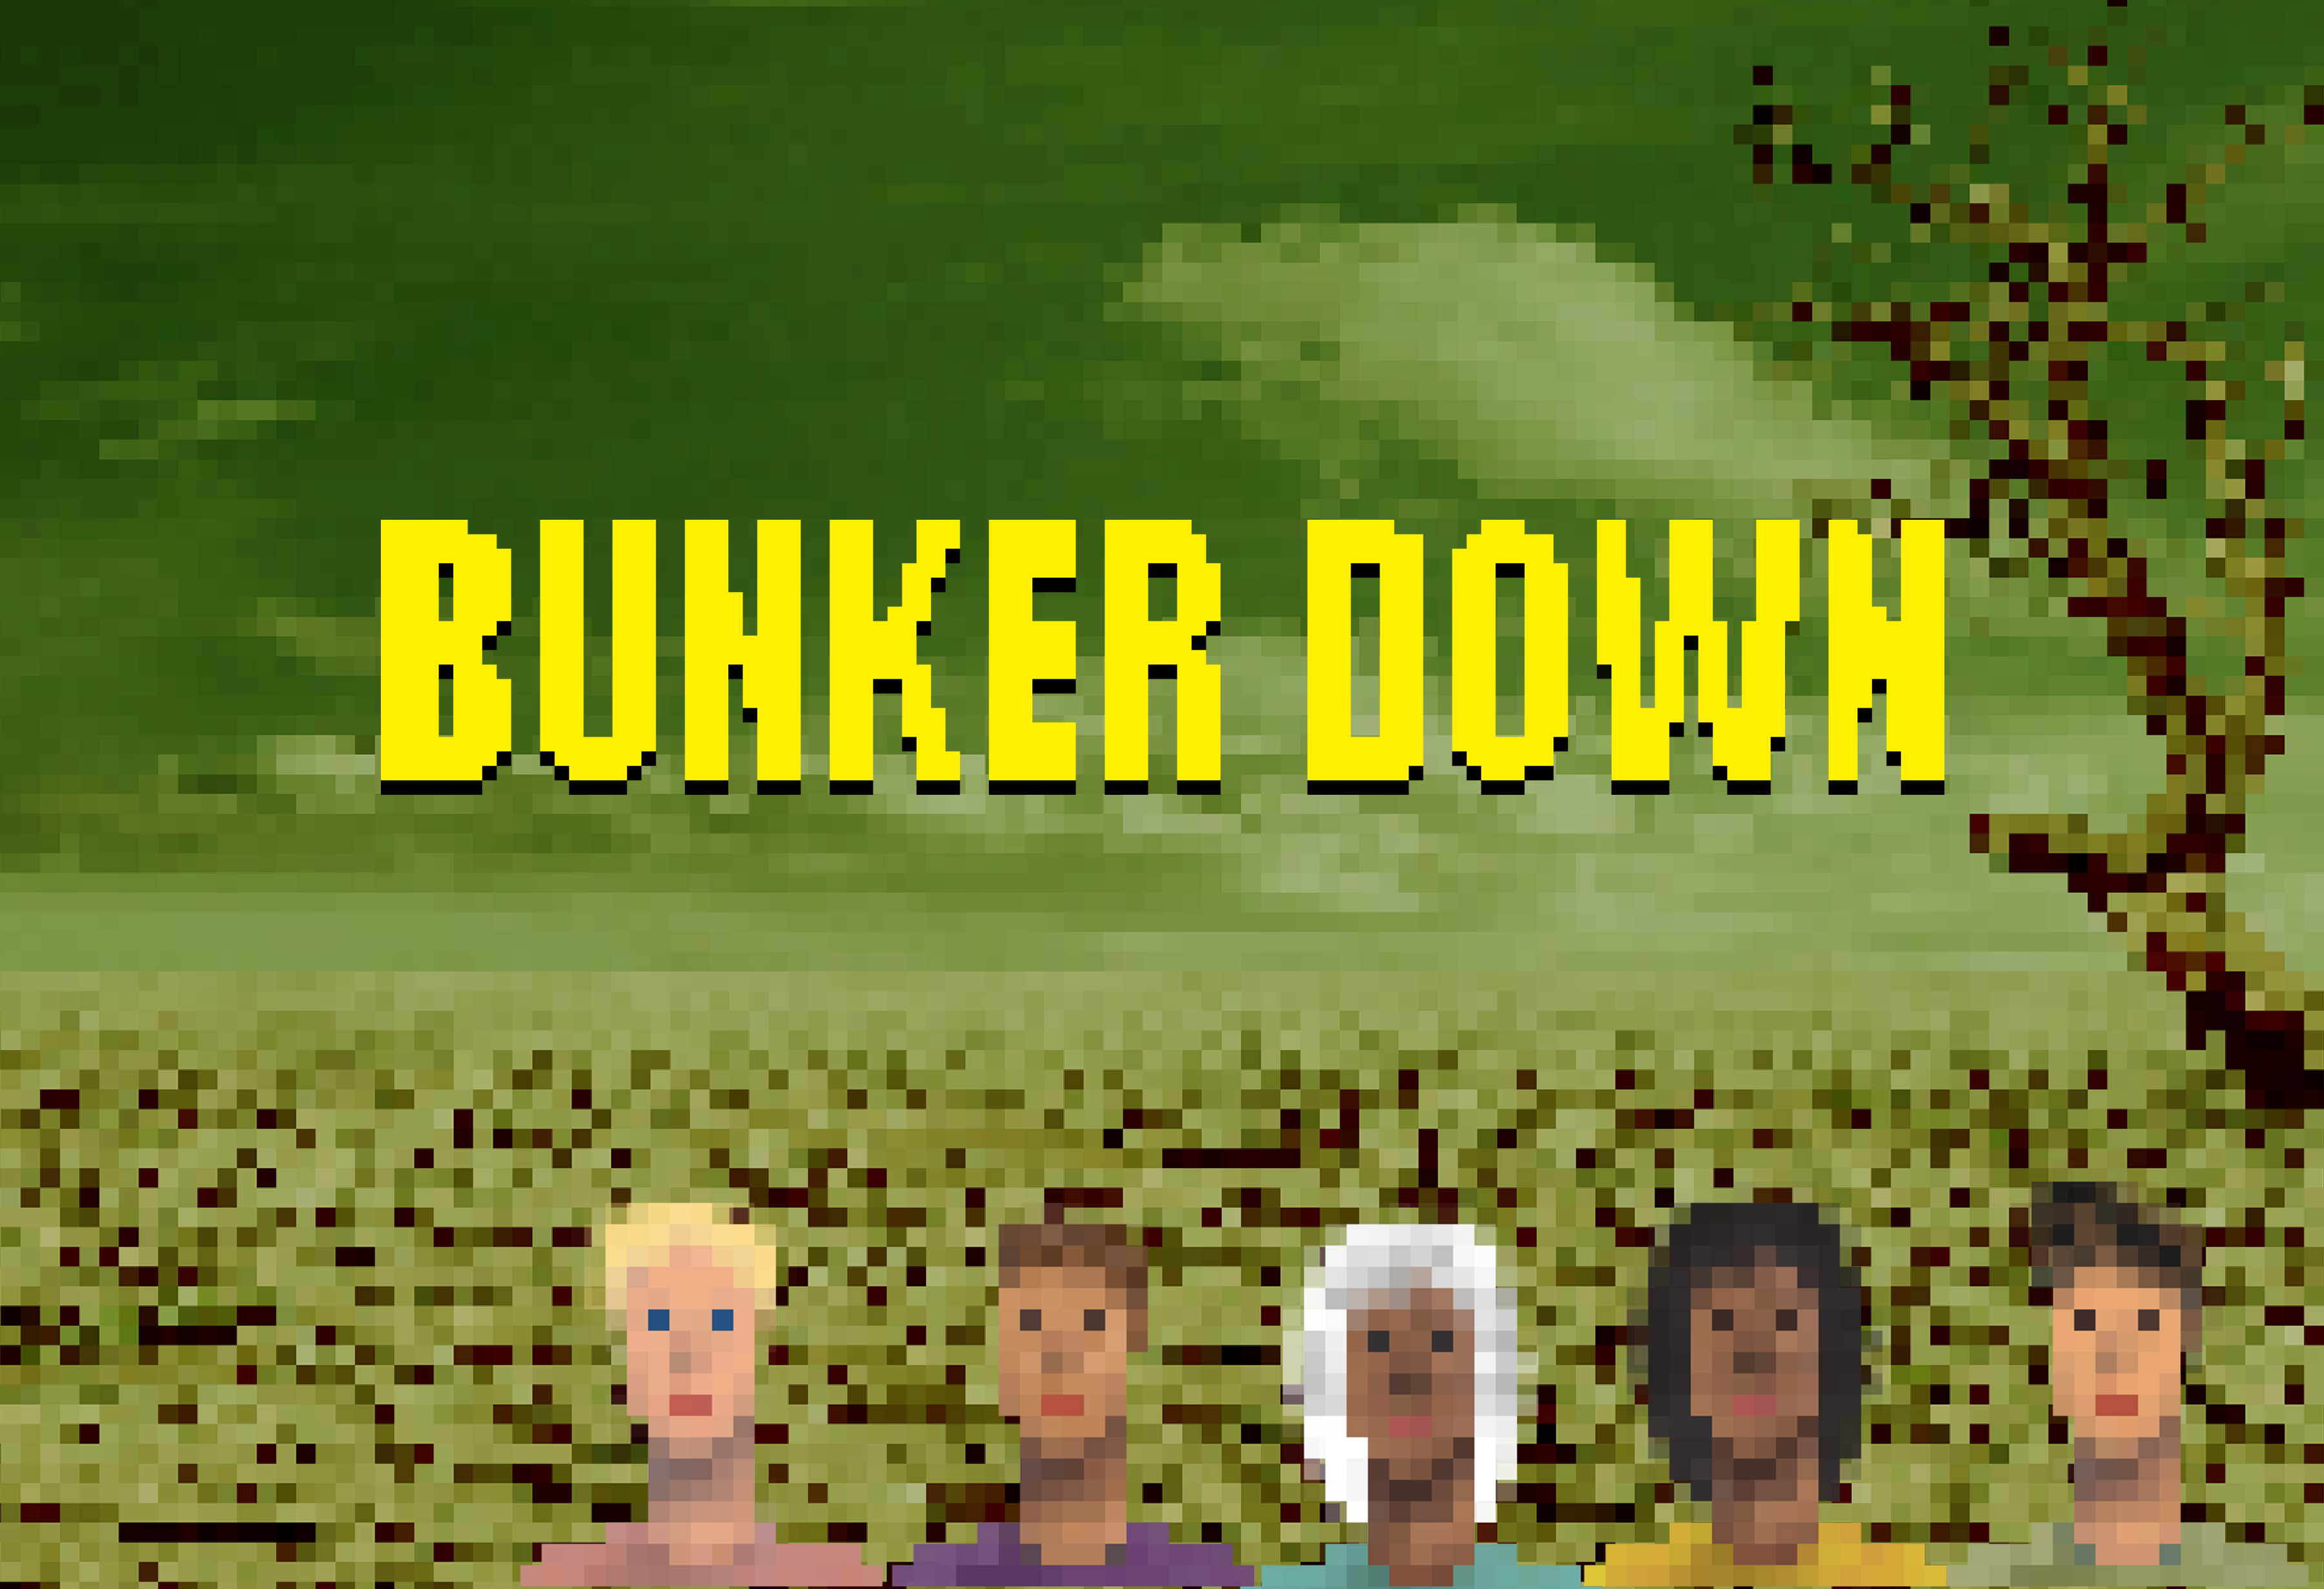 Bunker Down